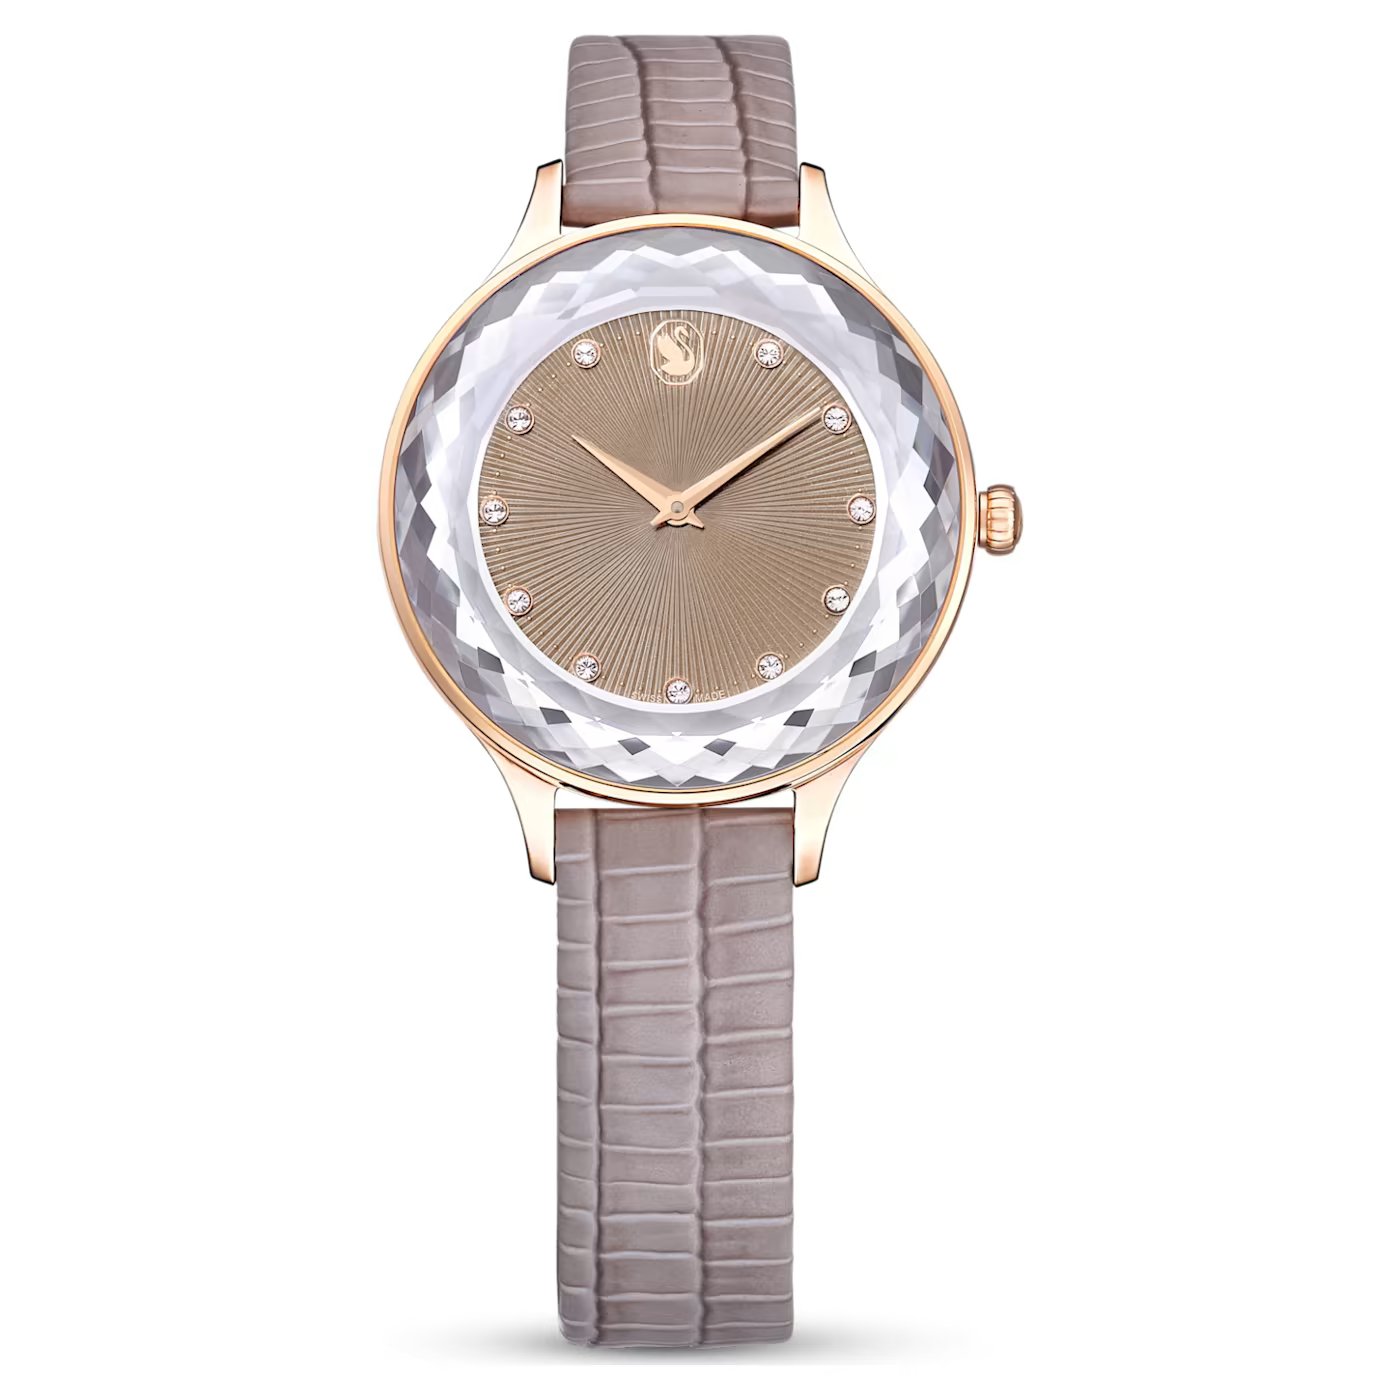 63c9bdc0ece9e_octea-nova-watch--swiss-made--leather-strap--beige--rose-gold-tone-finish-swarovski-5649999.jpg